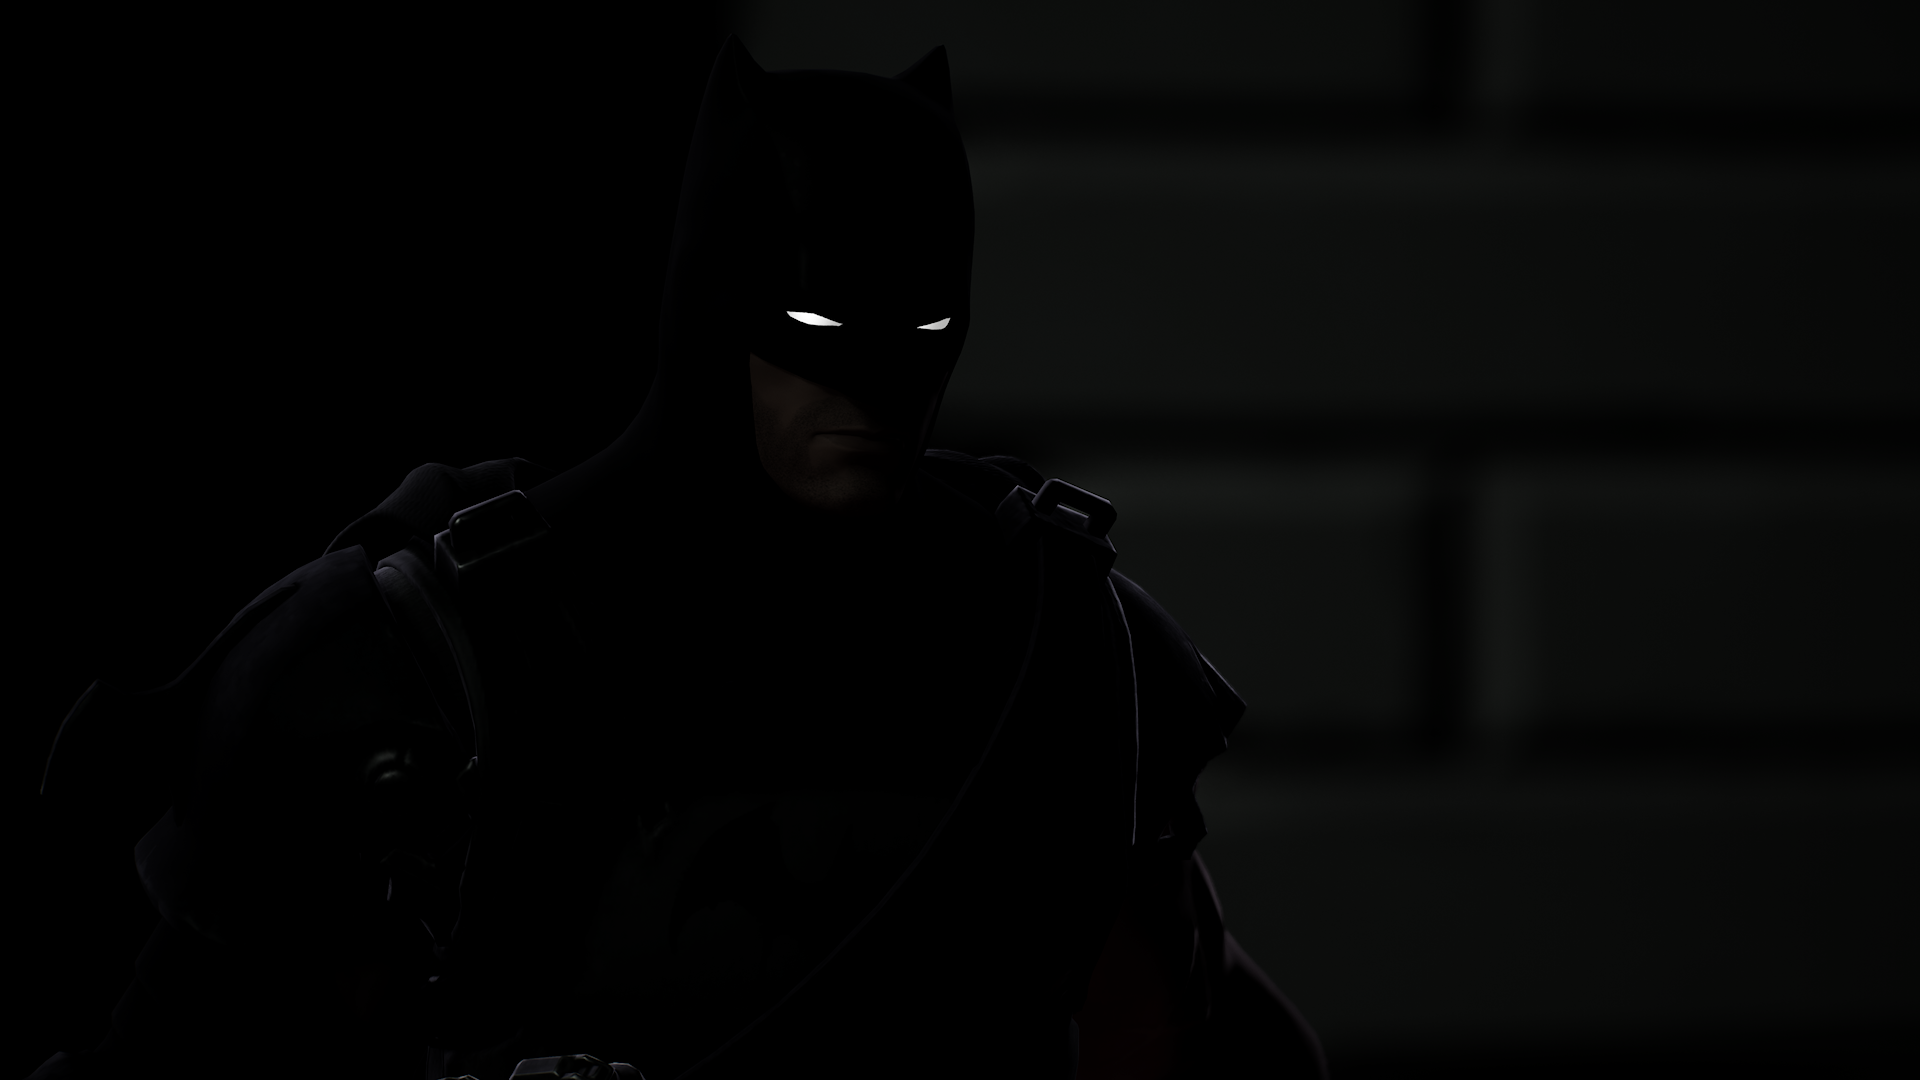 The Darkest Knight